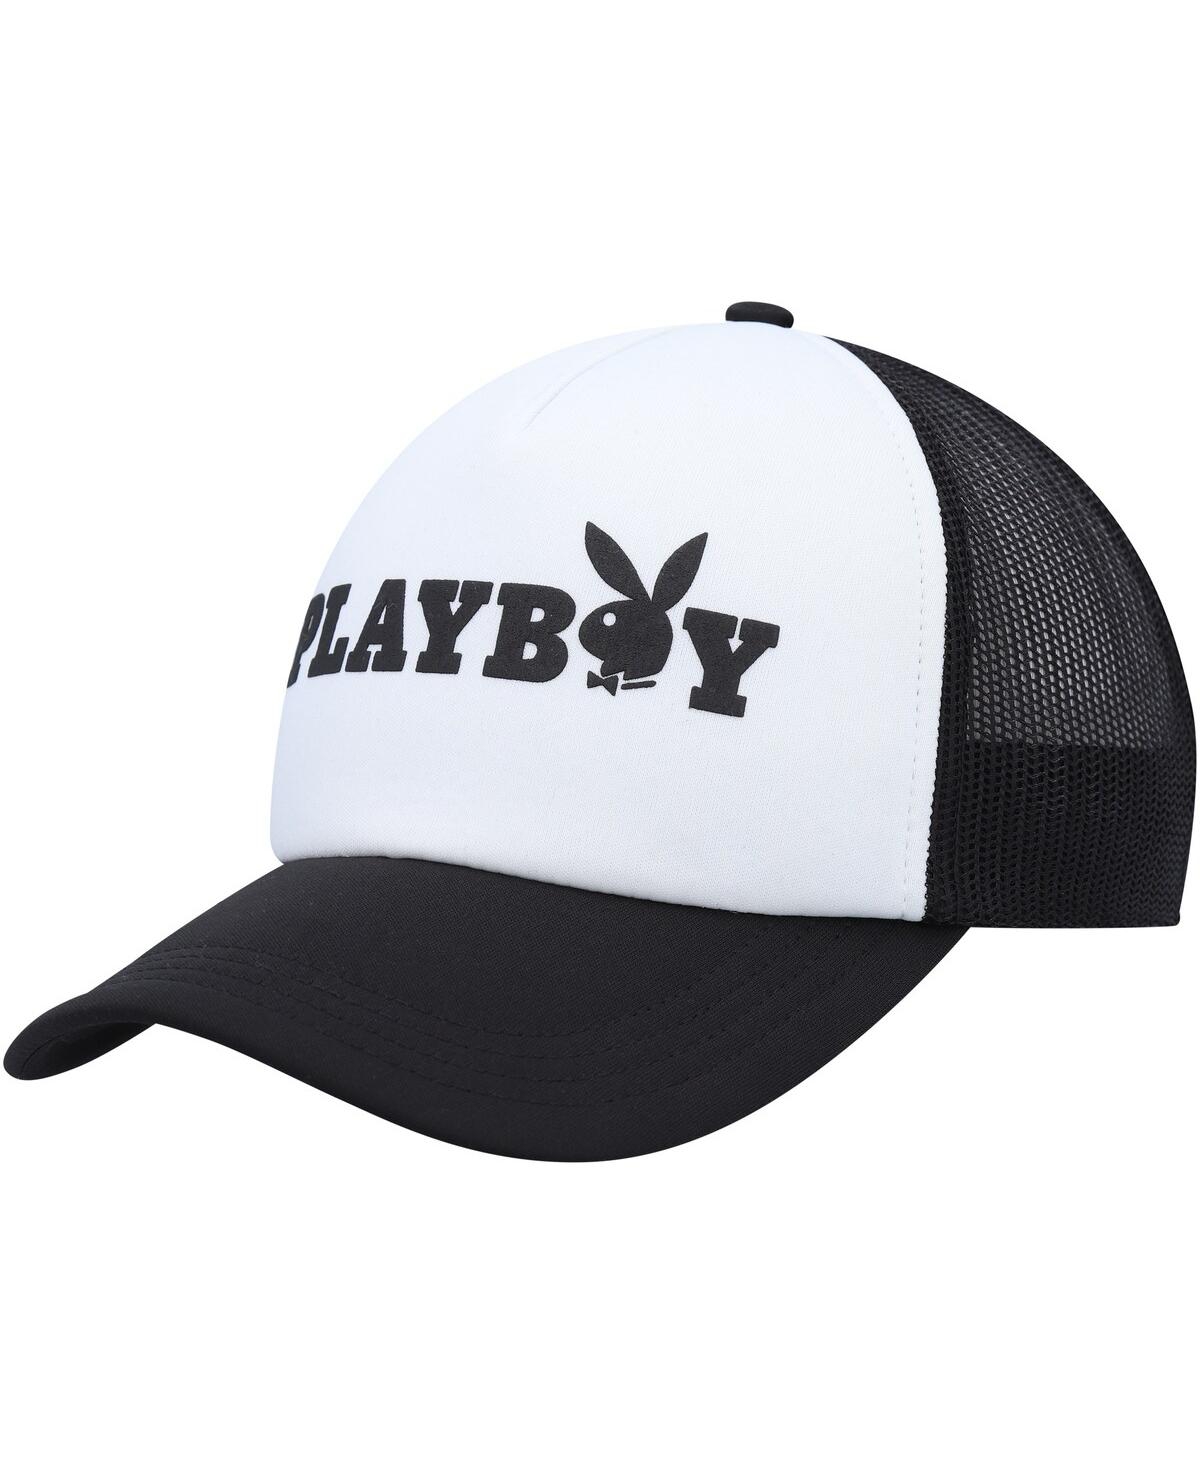 Men's Playboy White, Black Foam Trucker Snapback Hat - White, Black